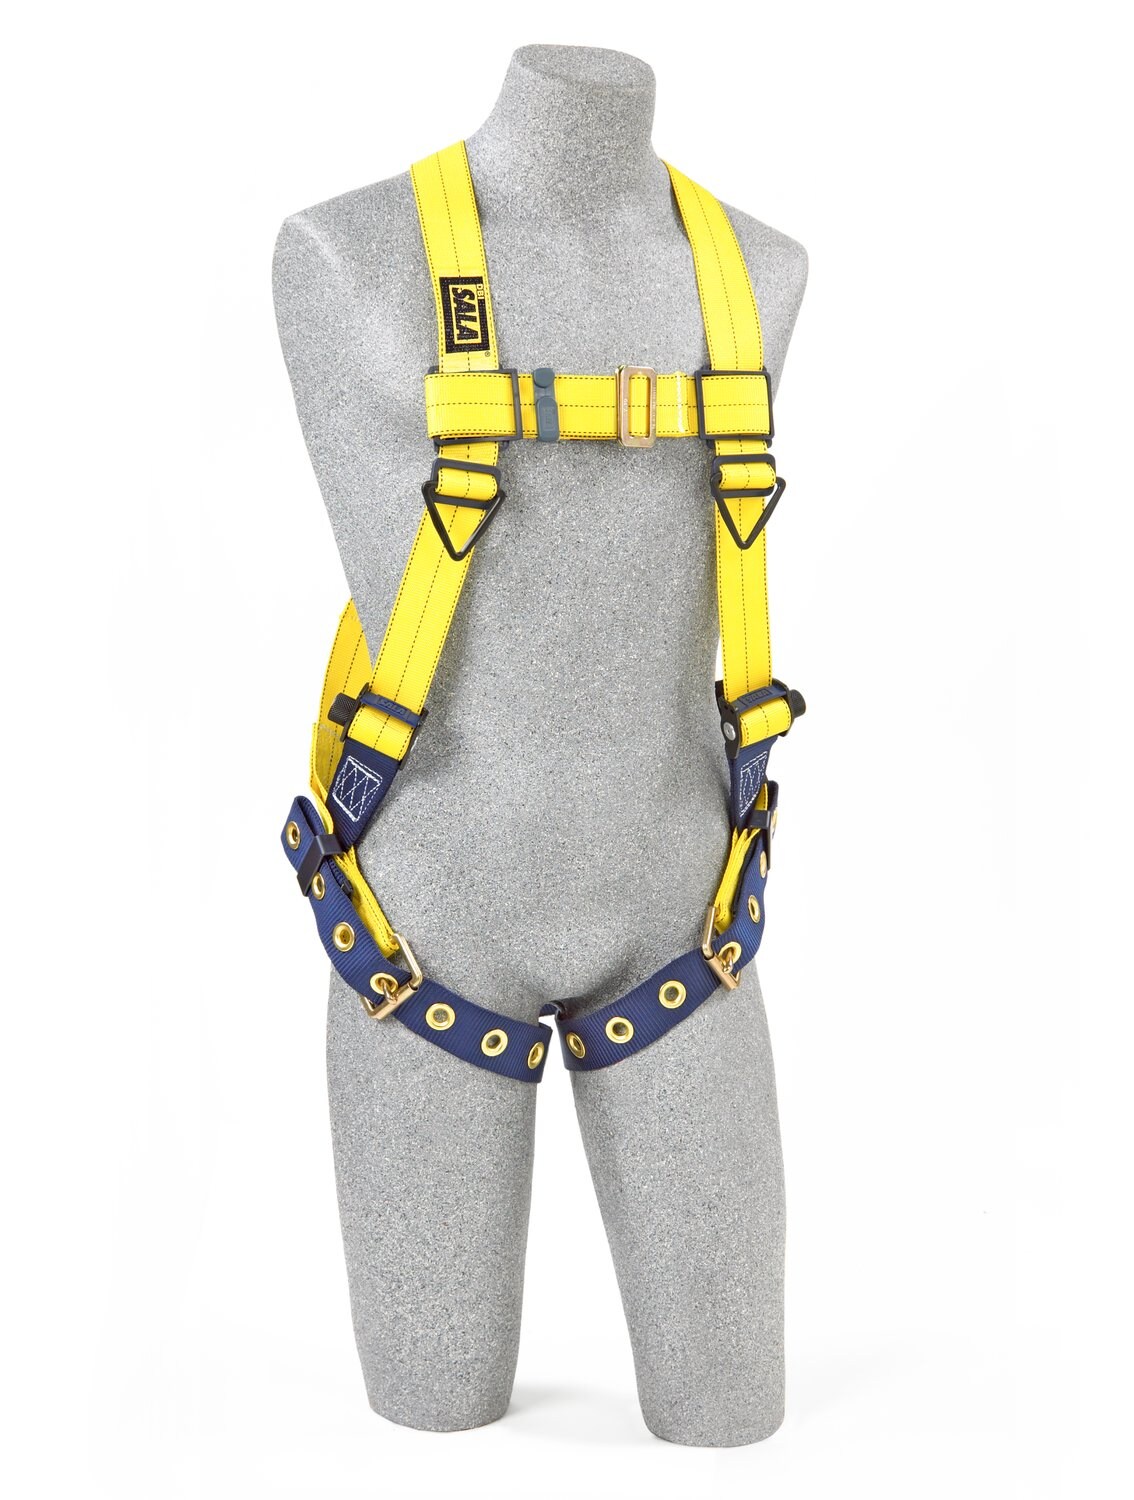 7012815218 - 3M DBI-SALA Delta Vest Safety Harness 1101256, X-Small